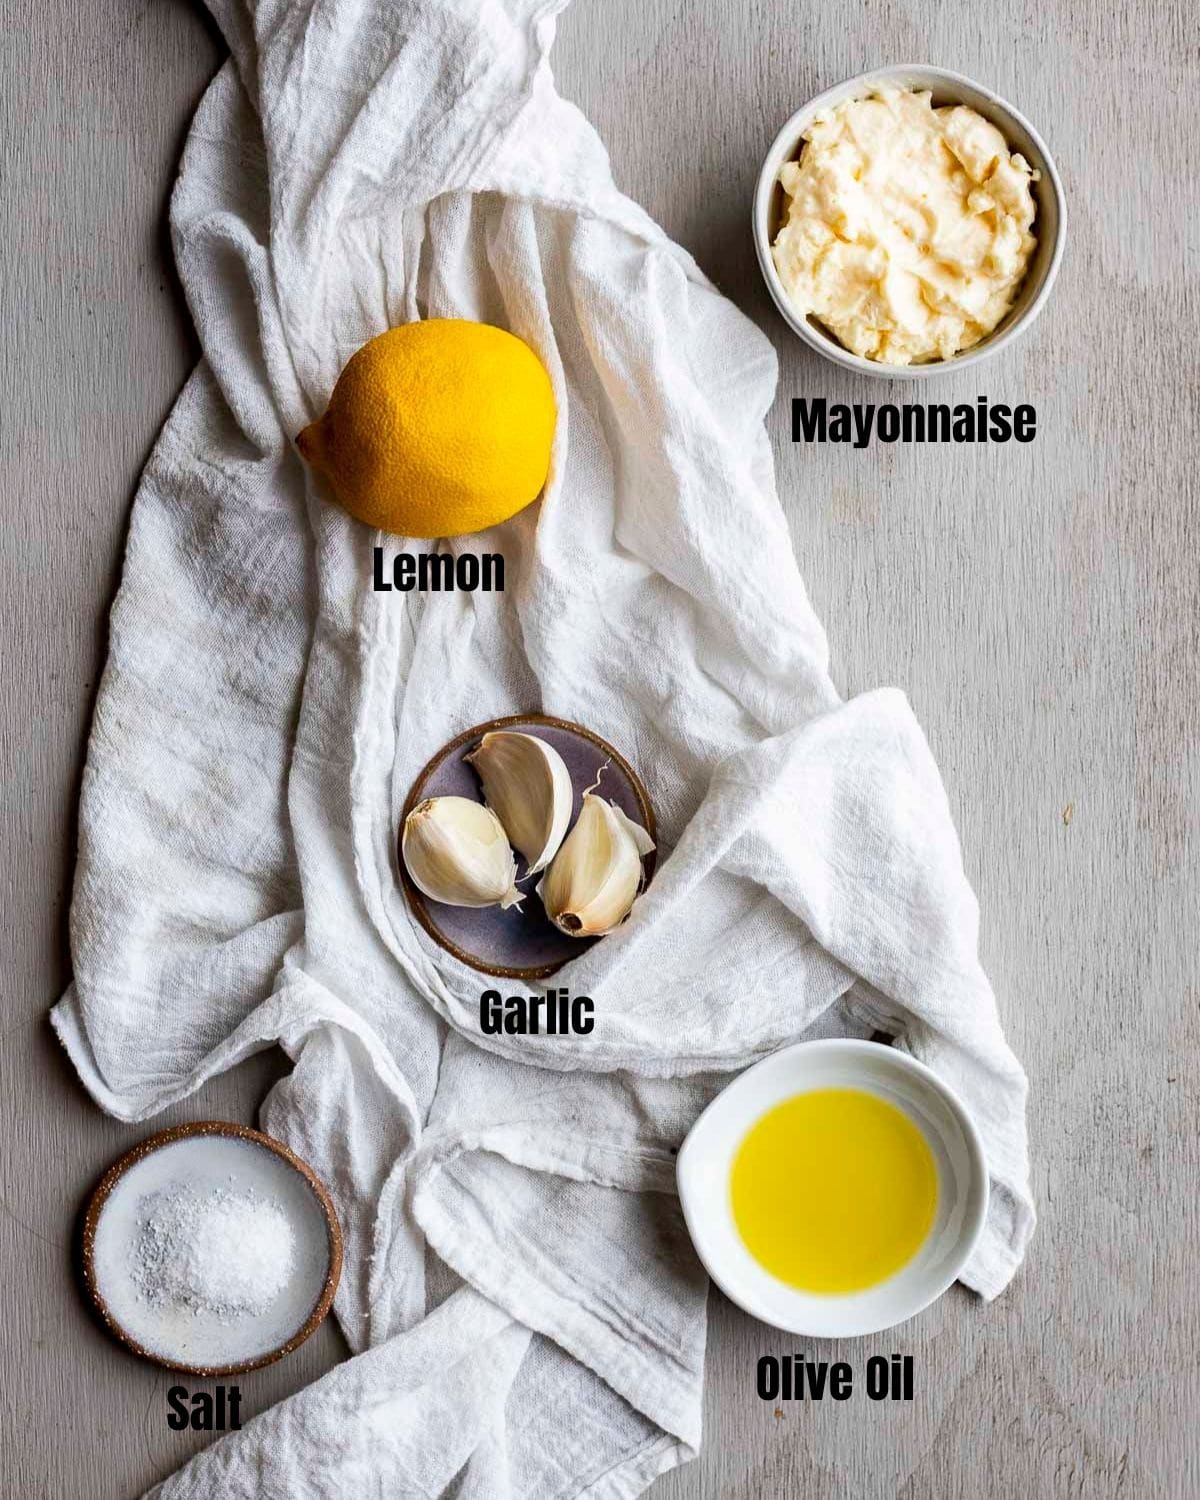 Ingredients to make garlic aioli arranged individually on a white cloth.